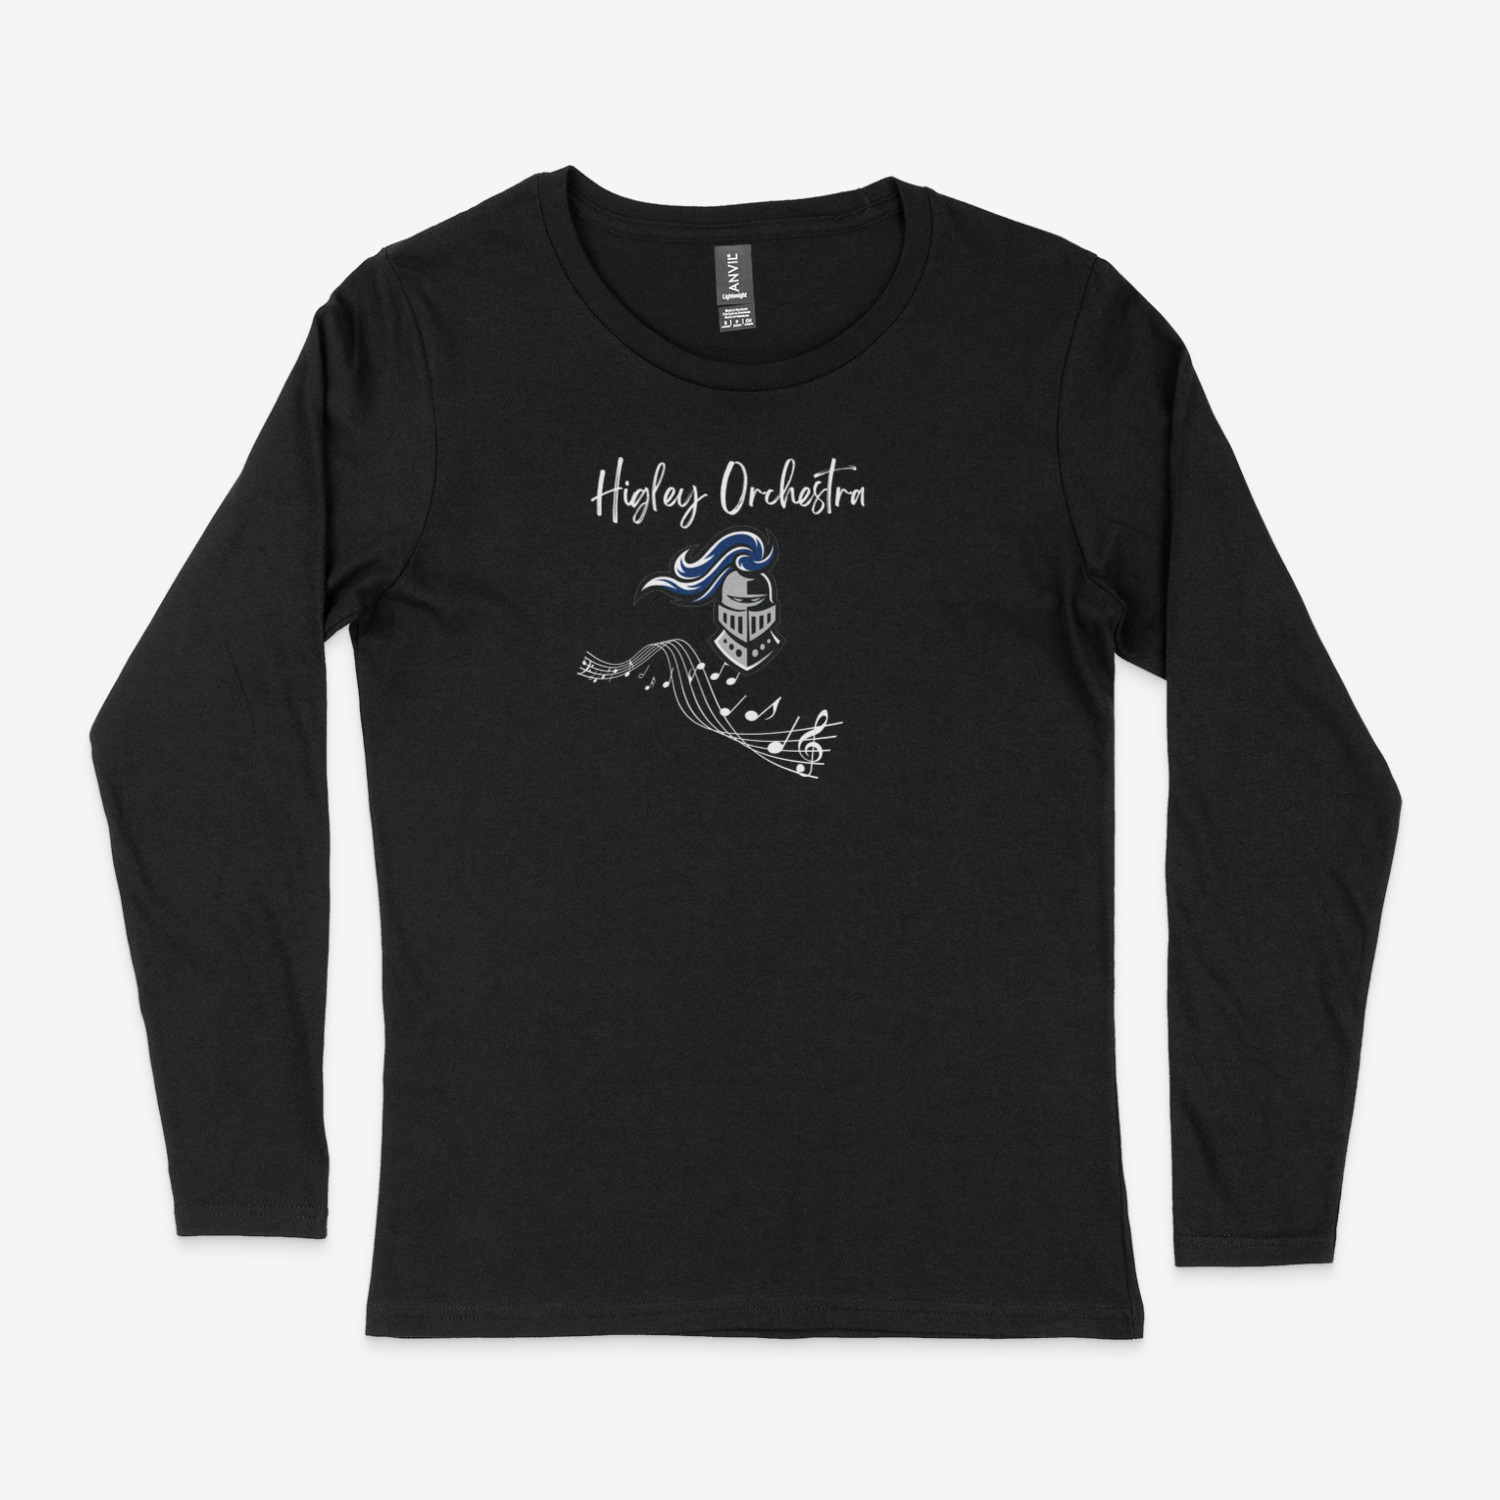 Higley Orchestra Long Sleeve T-Shirt - Parent